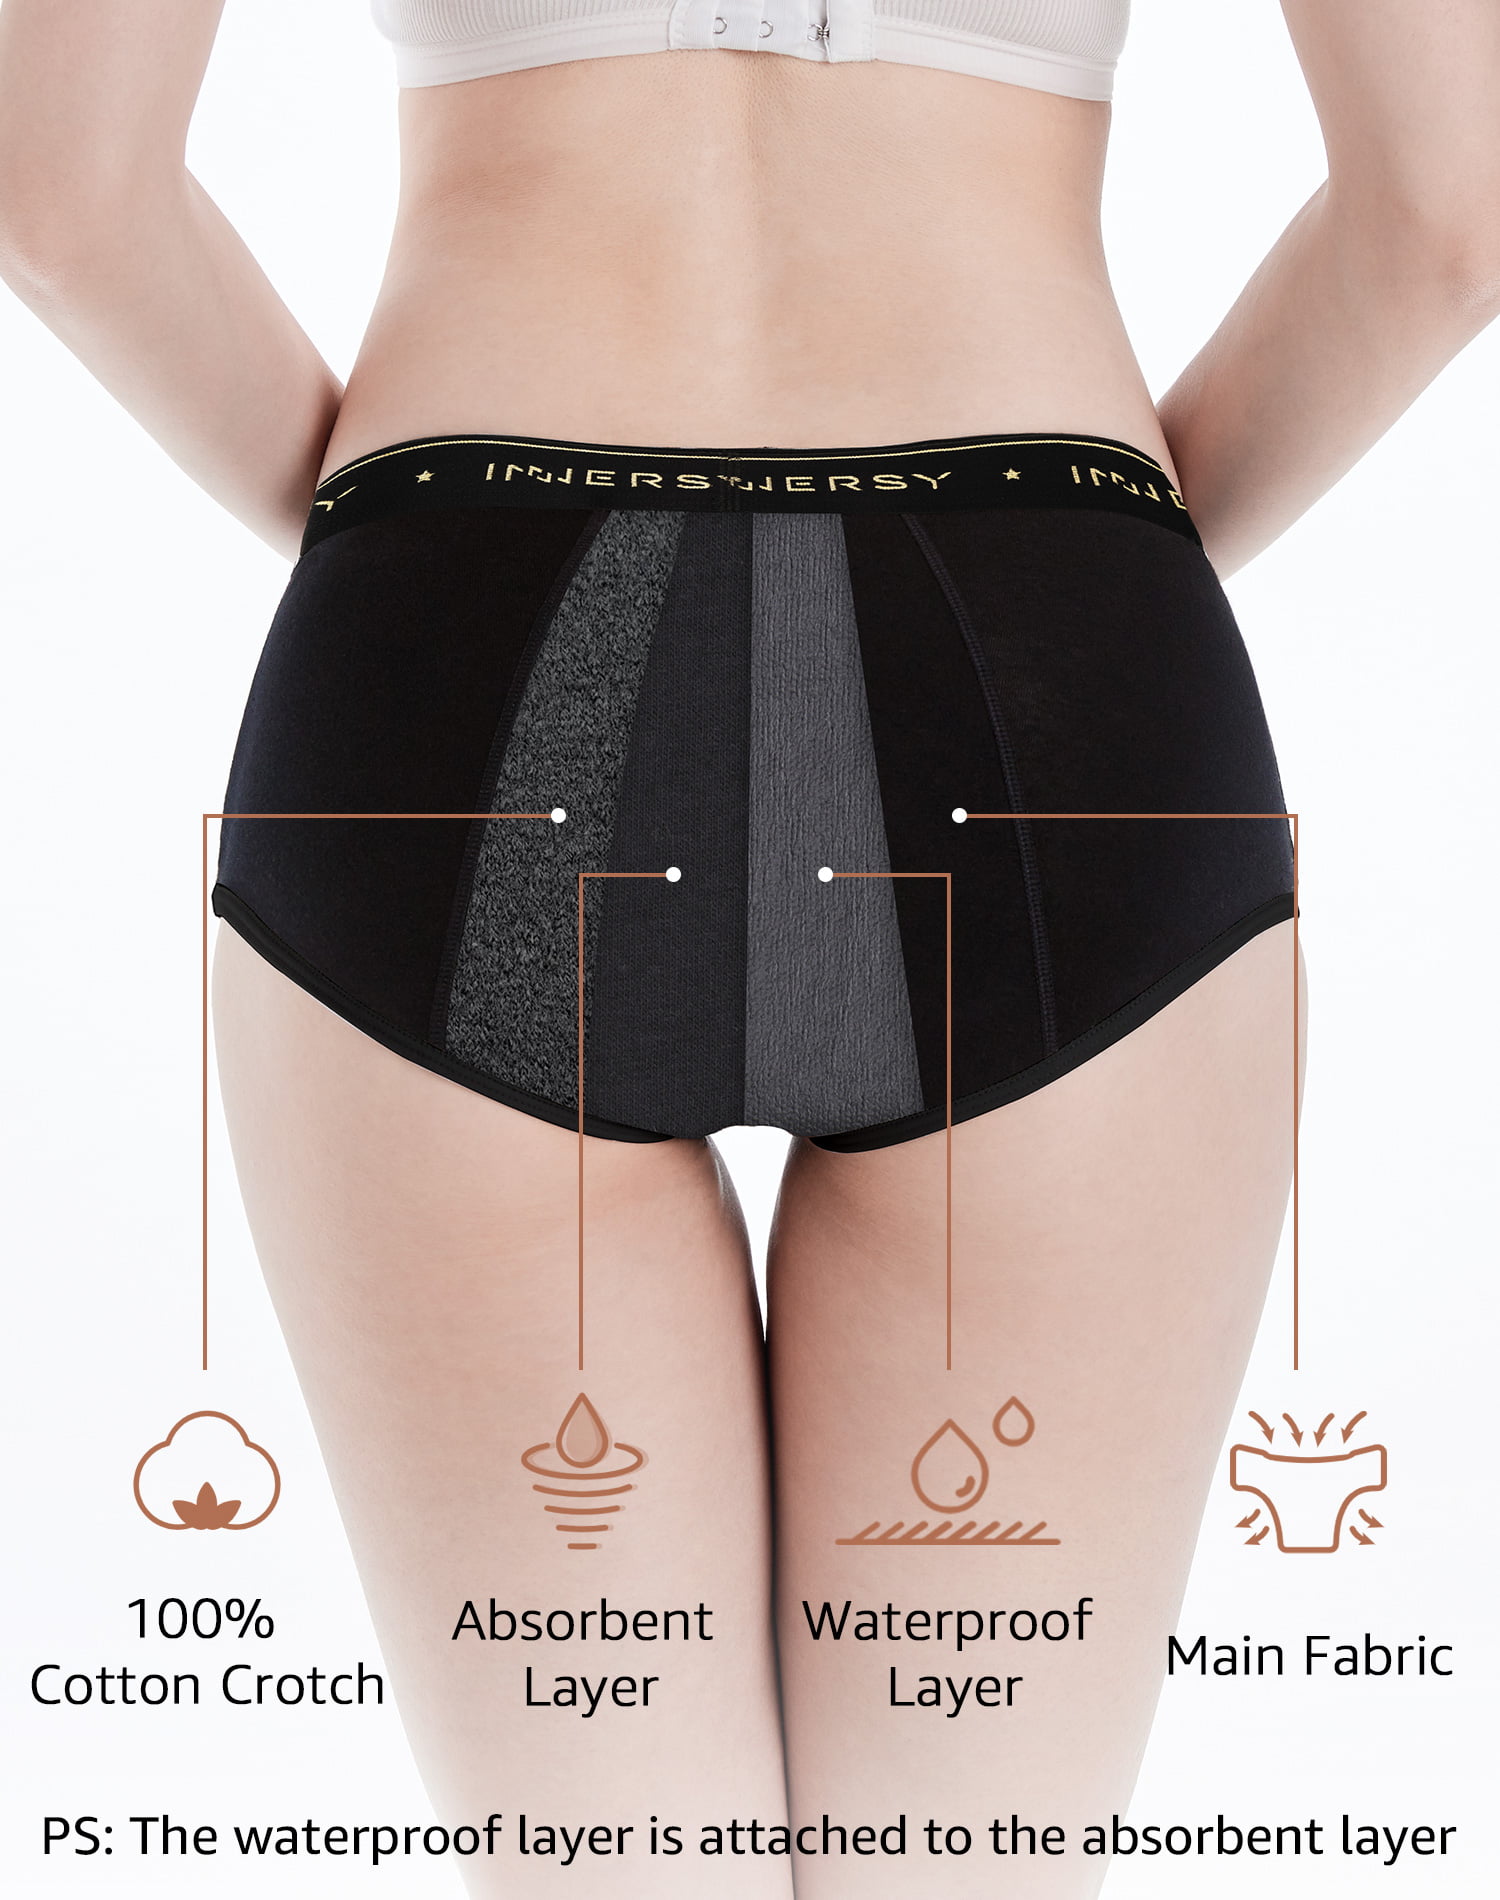 INNERSY Big Girls' Period Panties Menstrual Underwear for First Period  Starter 3-Pack (S(8-10 yrs), Dot&Stripe) 